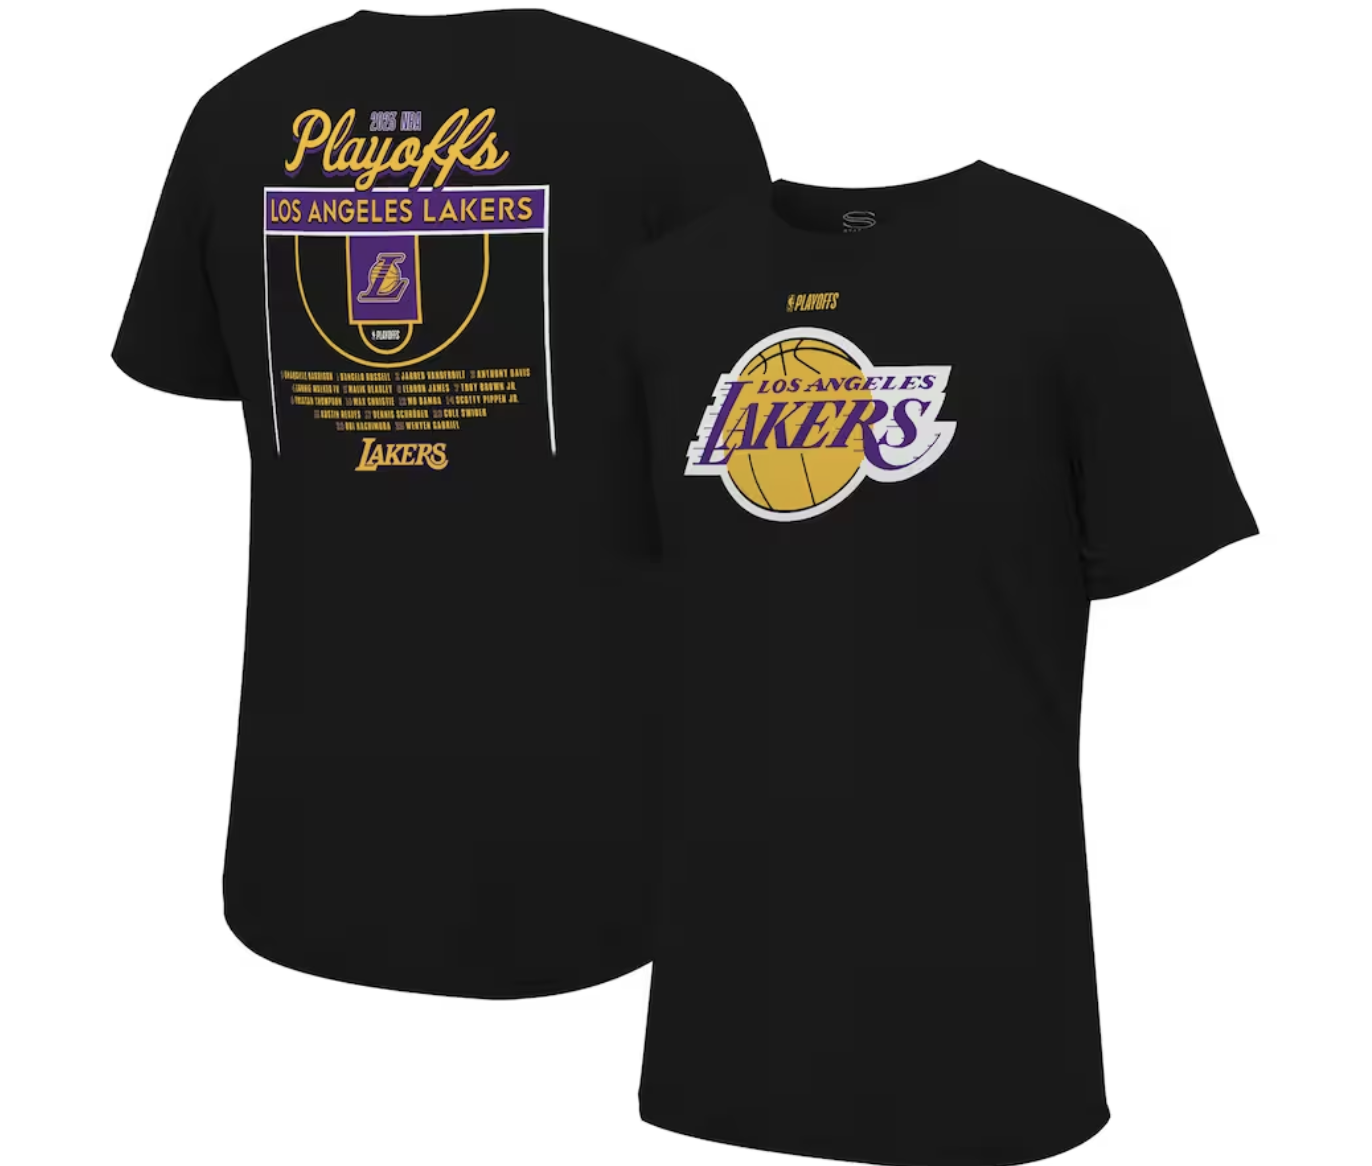 Los Angeles Lakers Apparel, Lakers Merchandise, Gear